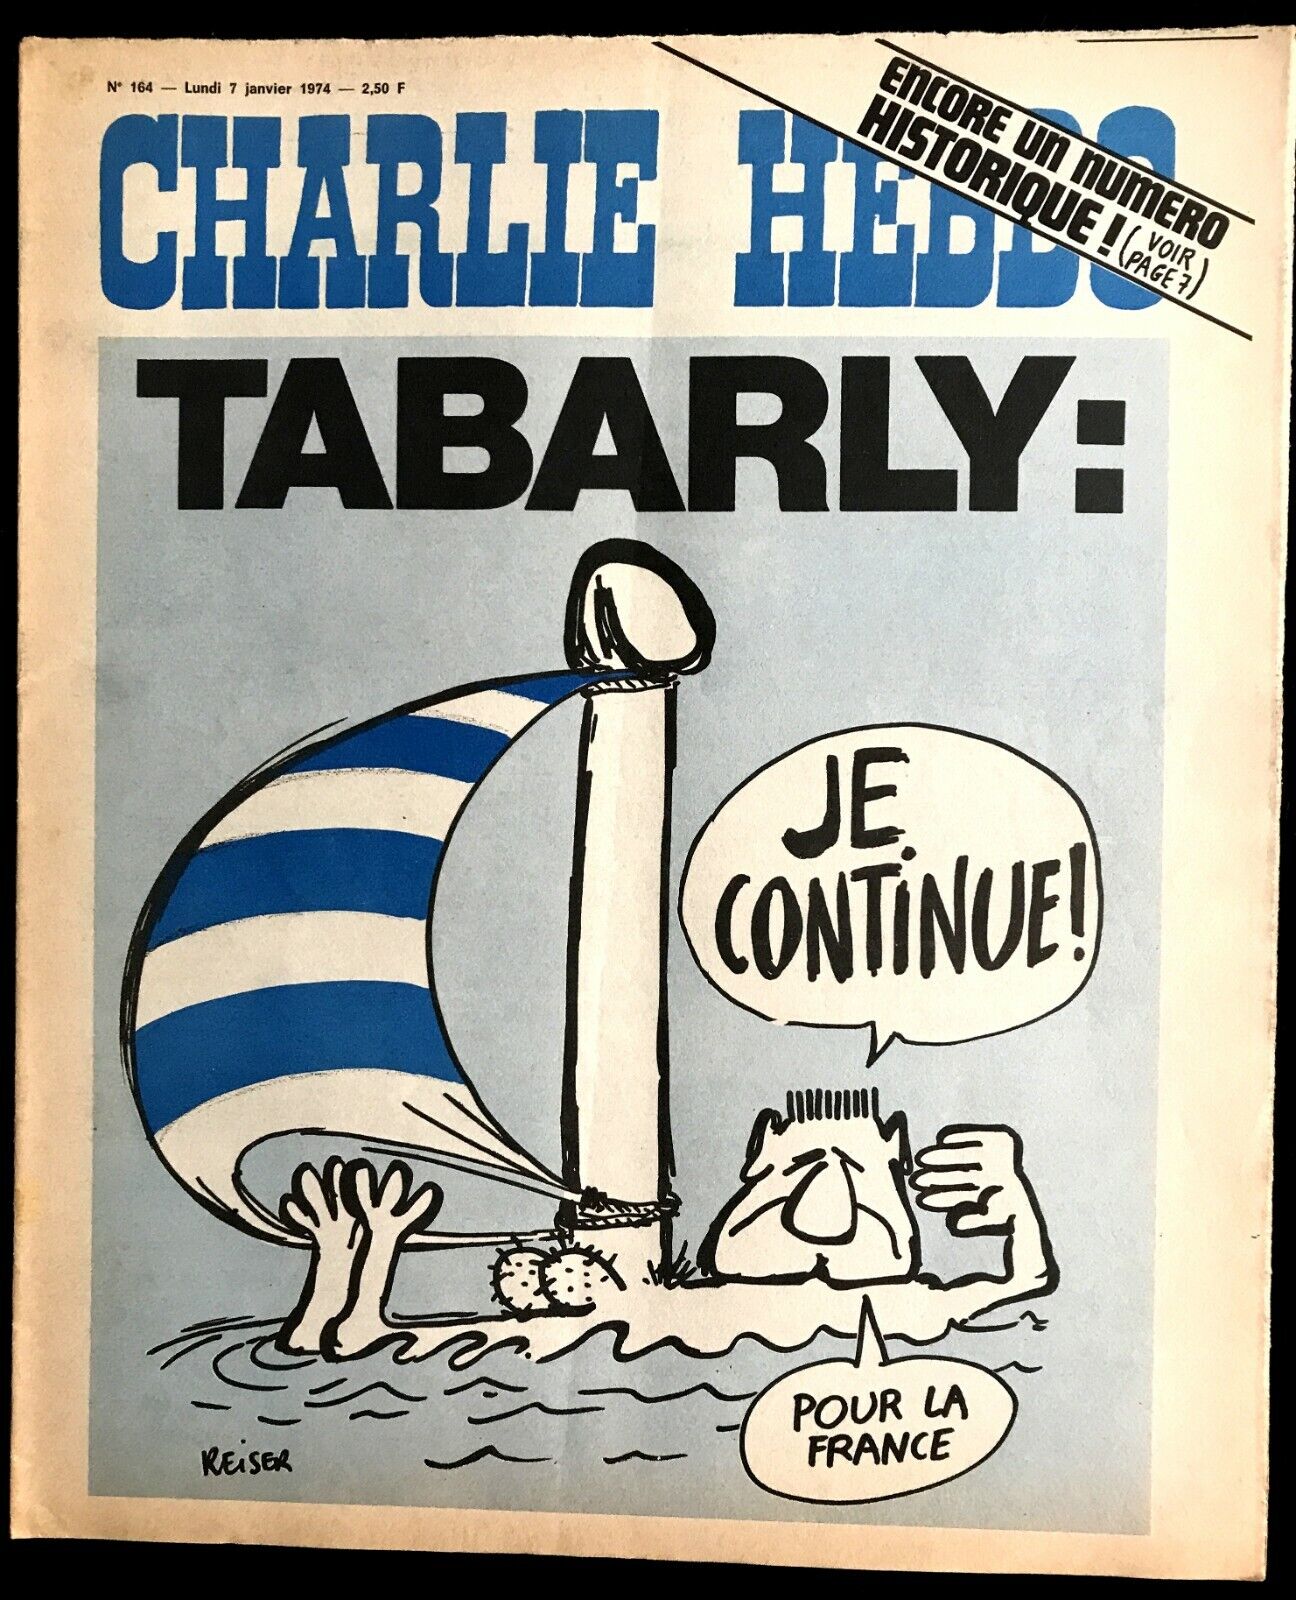 Image 1 - Charlie Hebdo nº 164 of 7/01/1974; tabarly; I still! for france